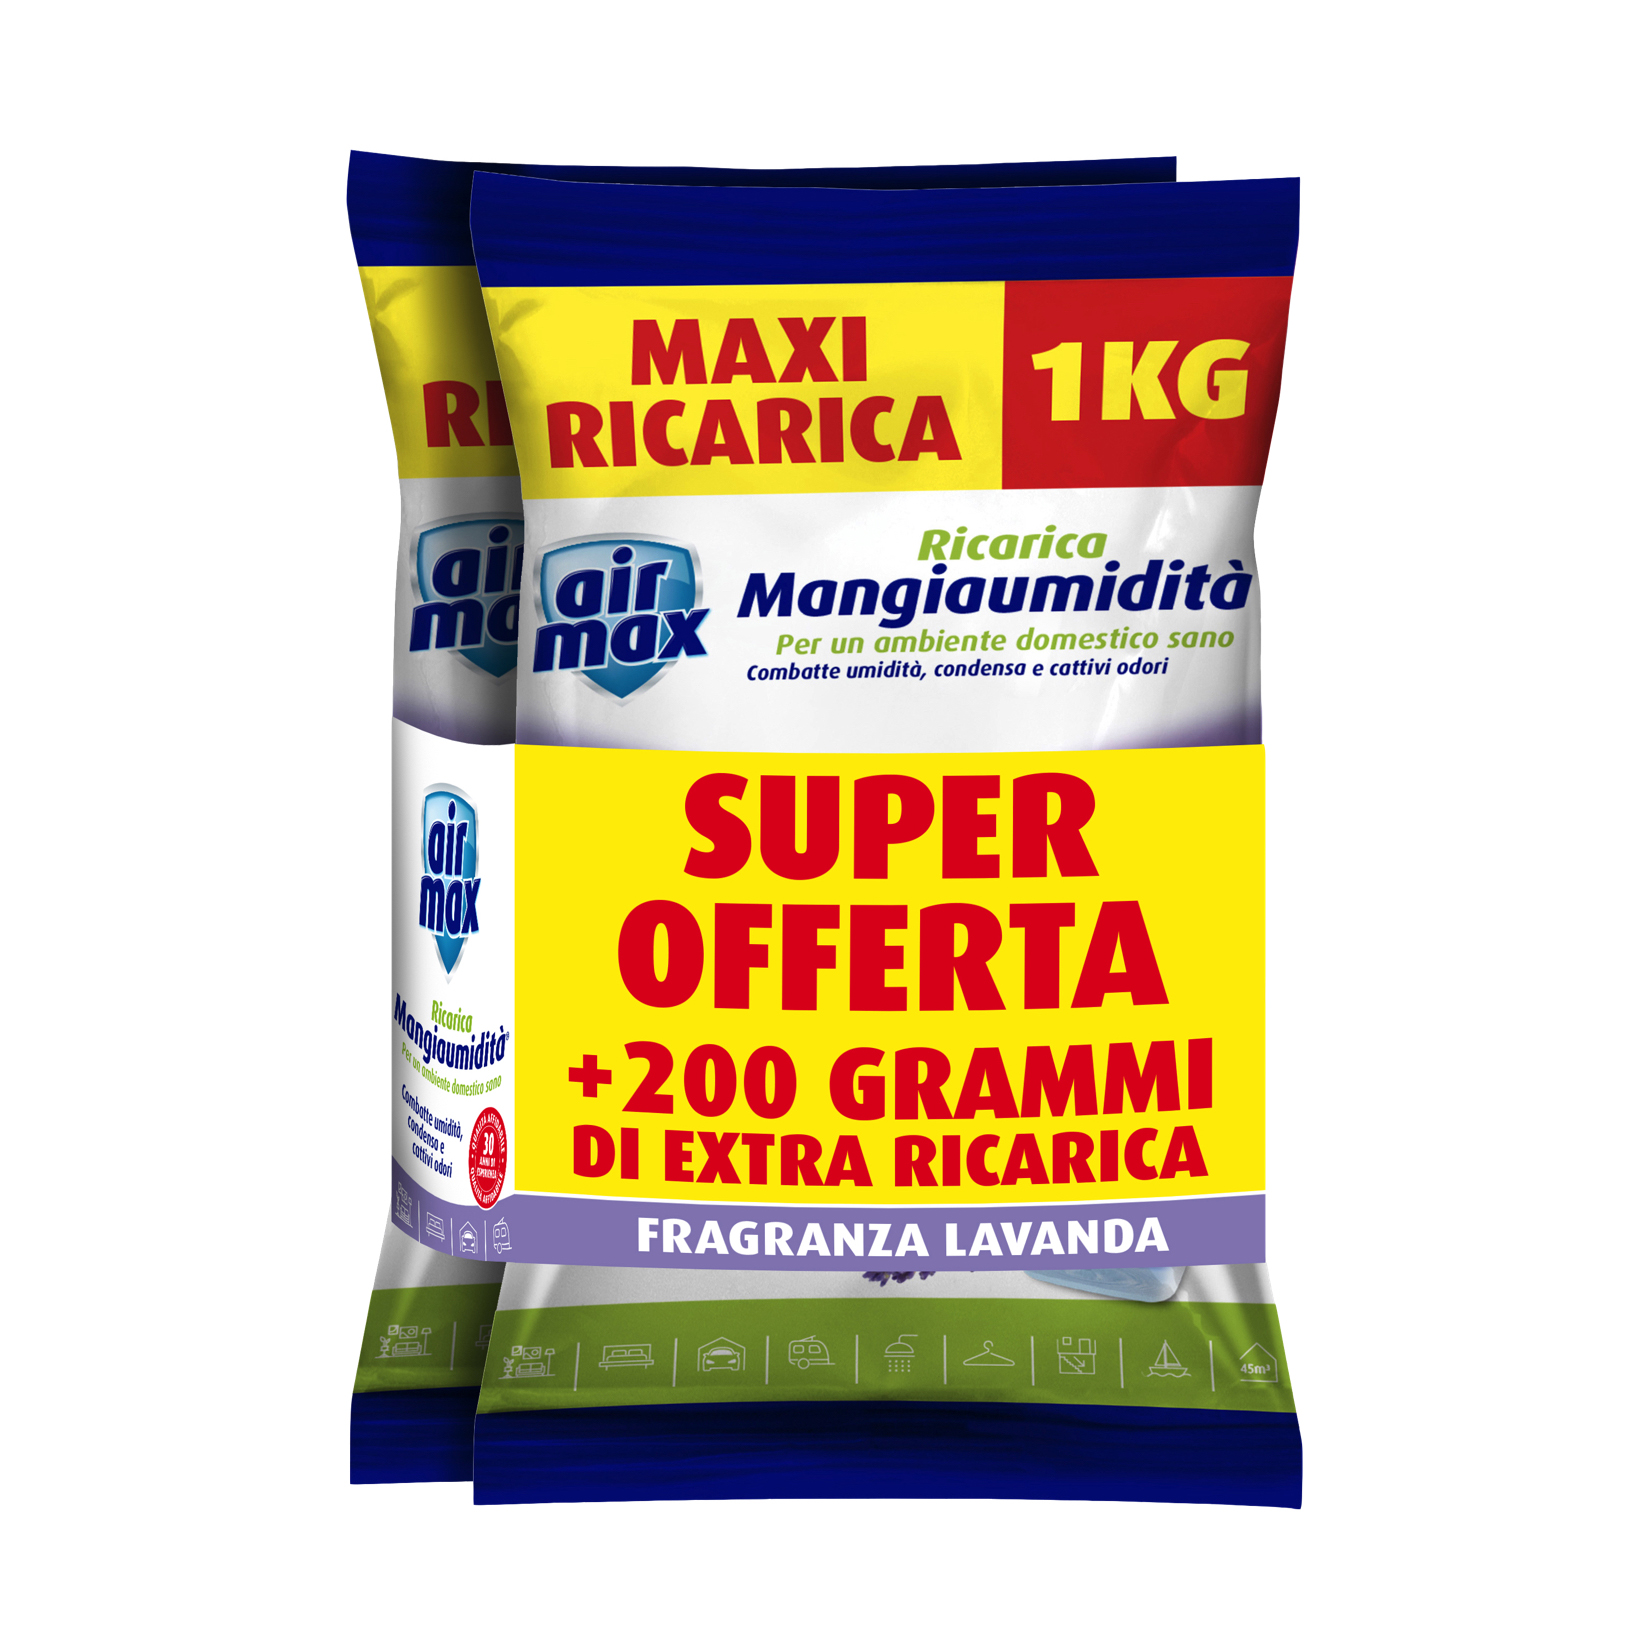 Ricarica mangiaumidità Air Max profumo lavanda 1 kg + 1 kg